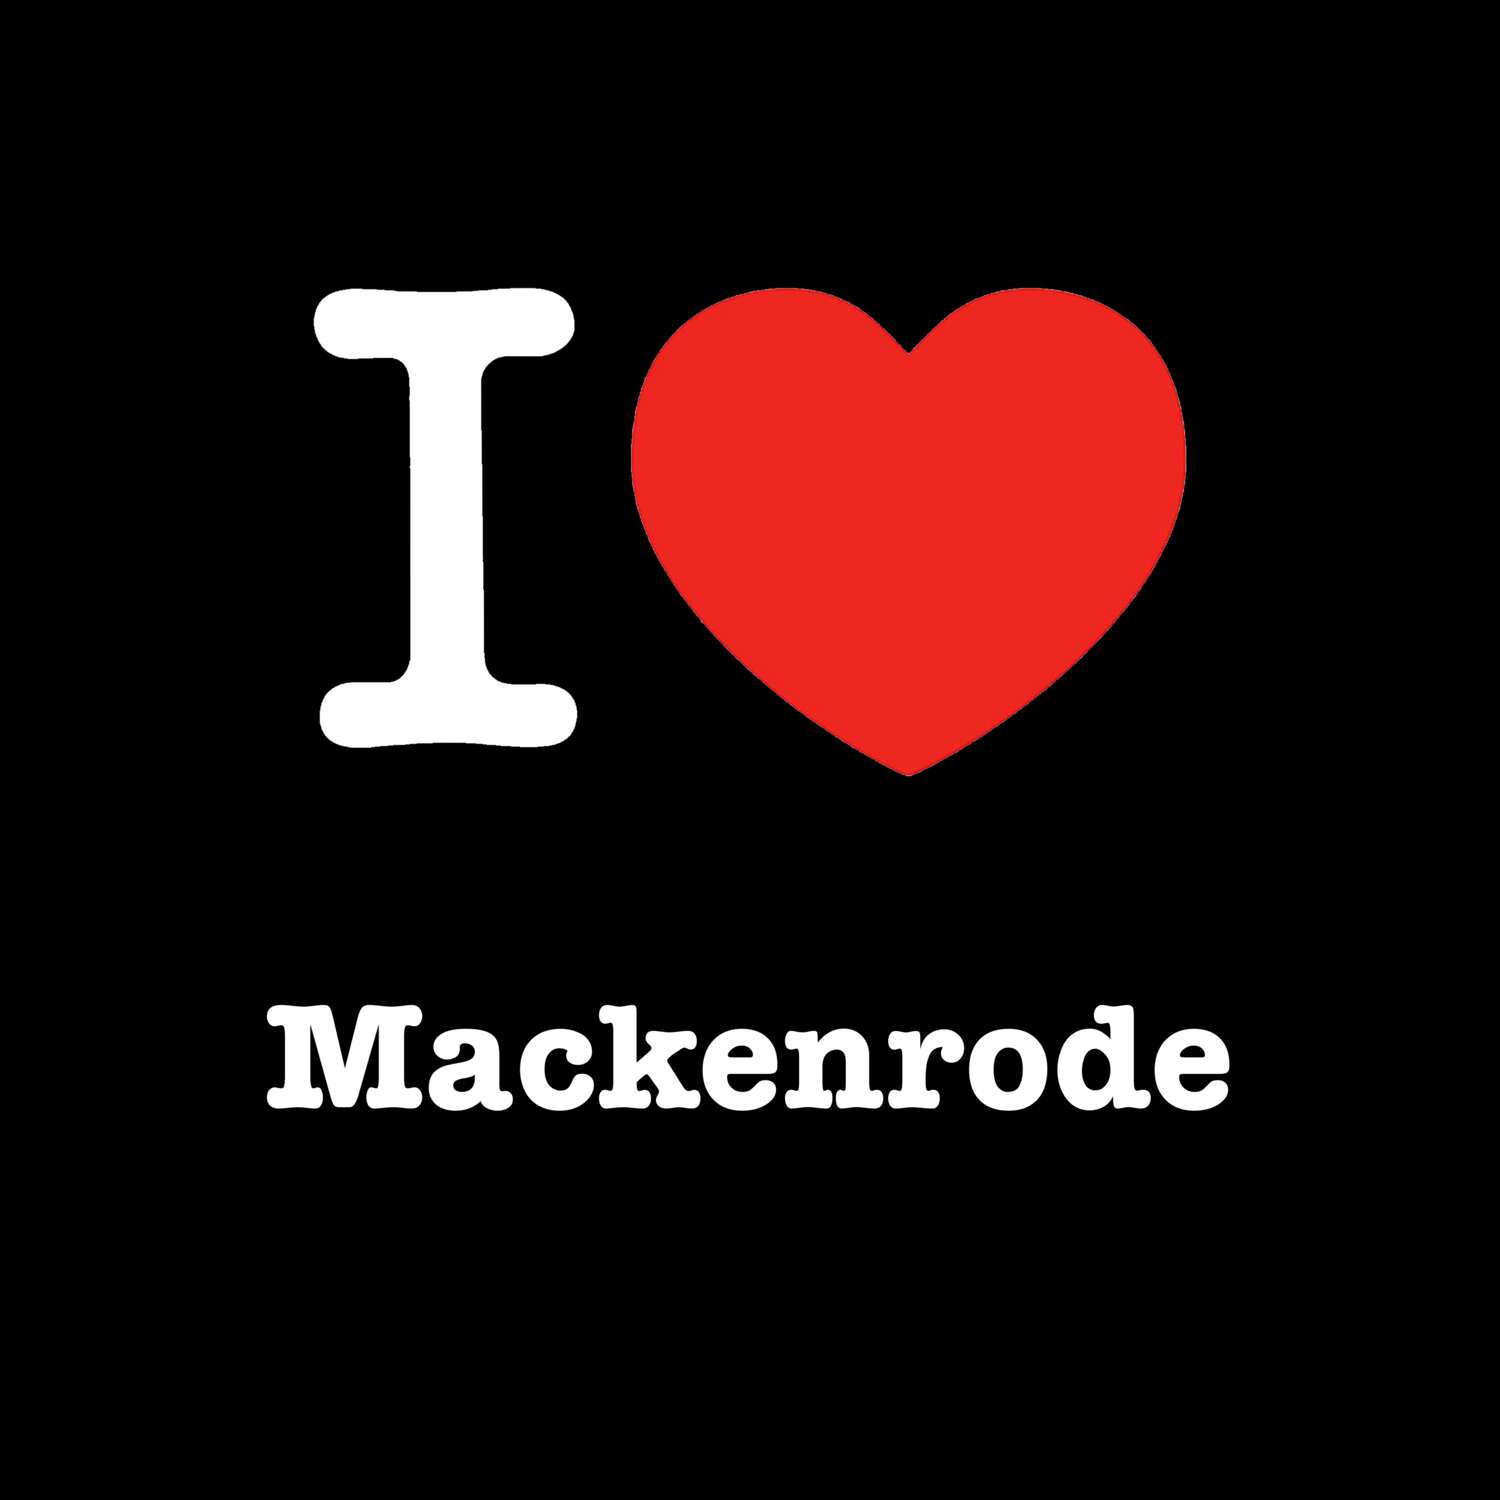 Mackenrode T-Shirt »I love«